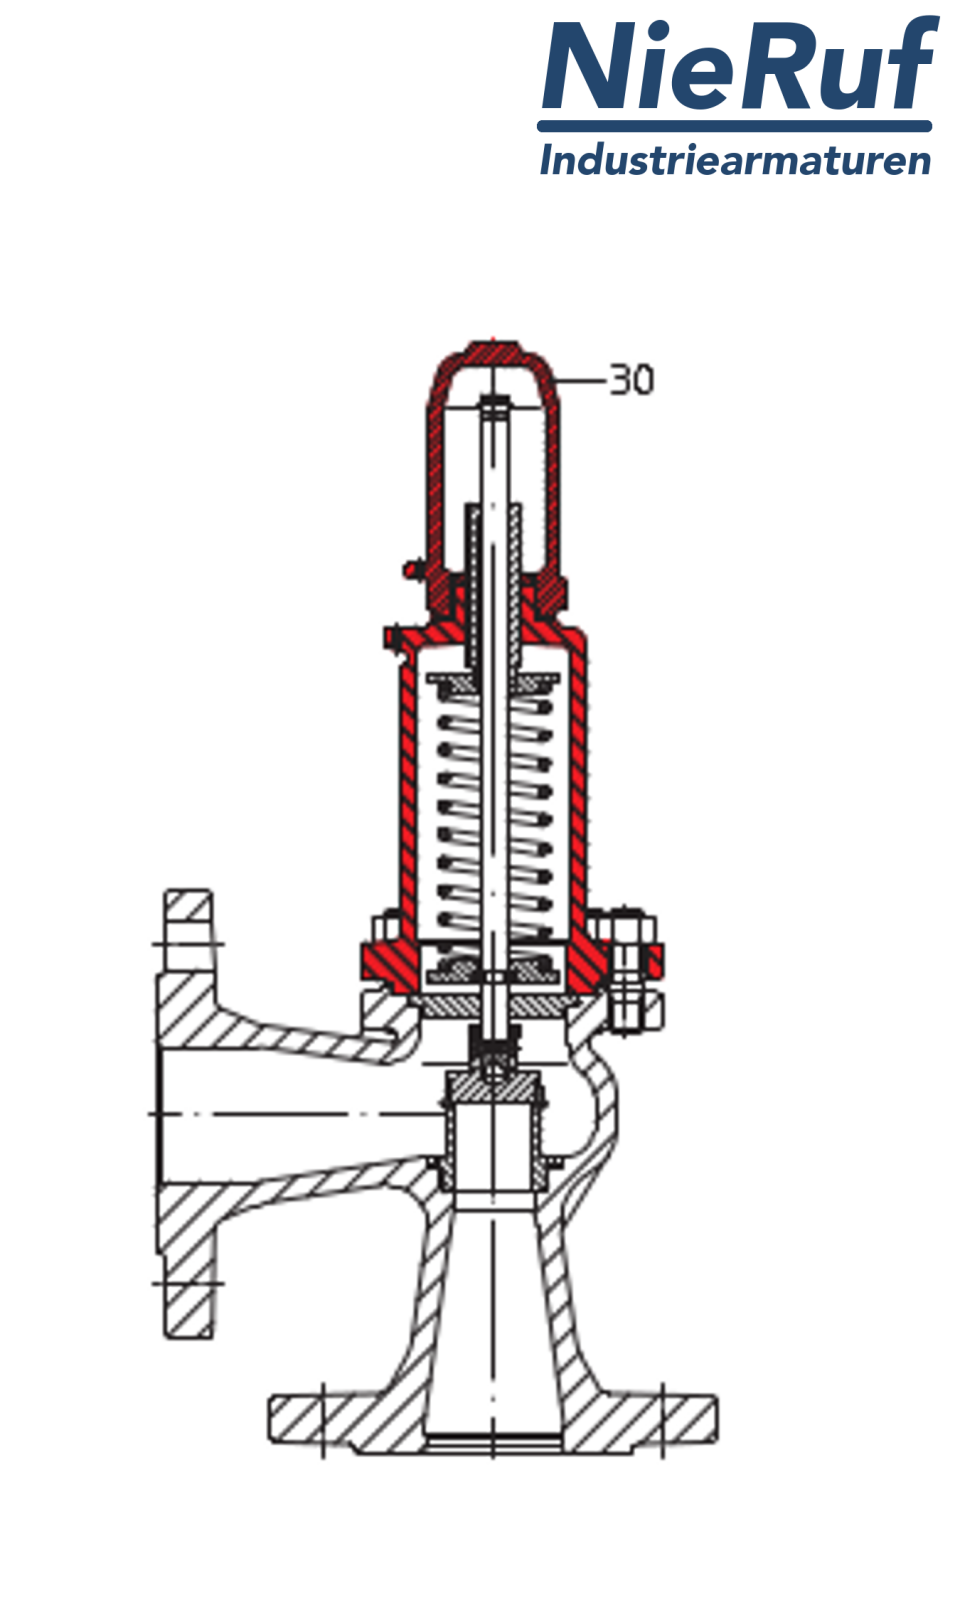 flange-safety valve DN65/DN65 SF0101, cast iron EN-JL1040 FPM, without lever